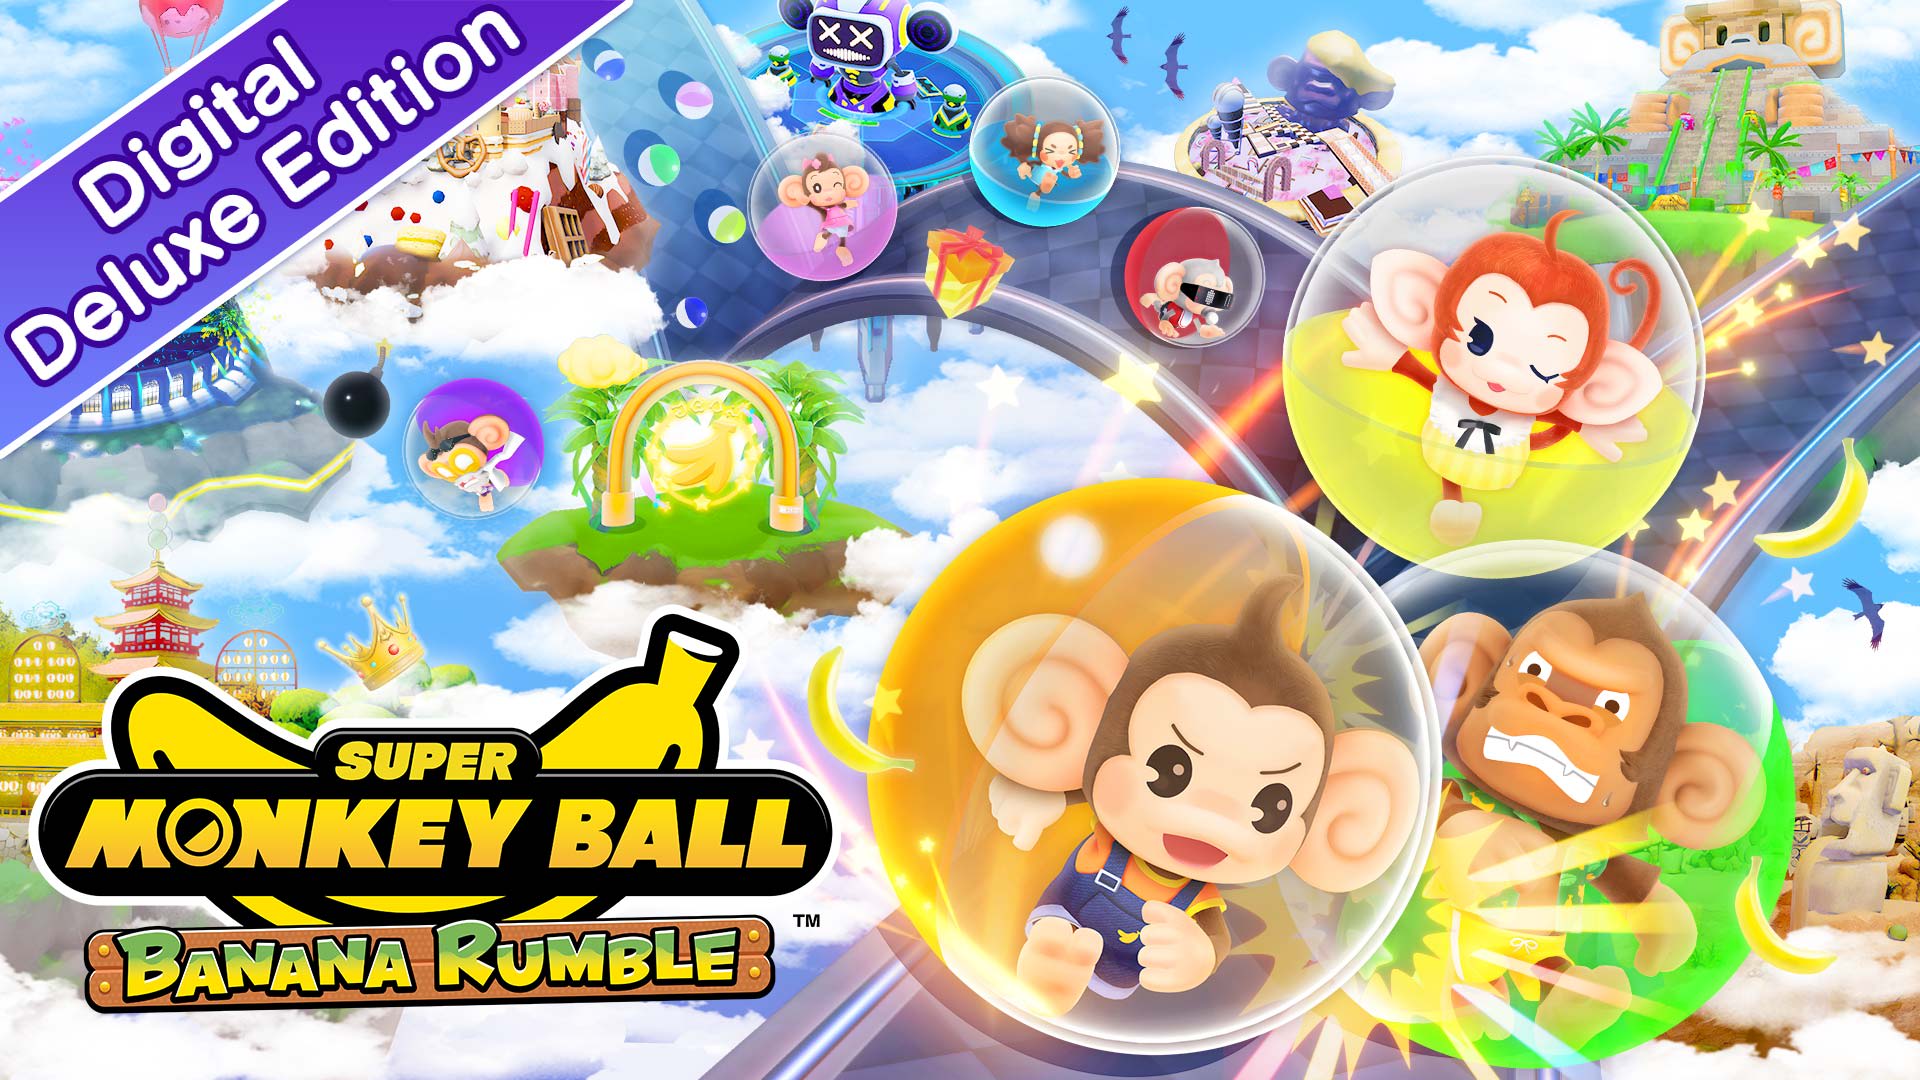 Super Monkey Ball Banana Rumble Digital Deluxe Edition